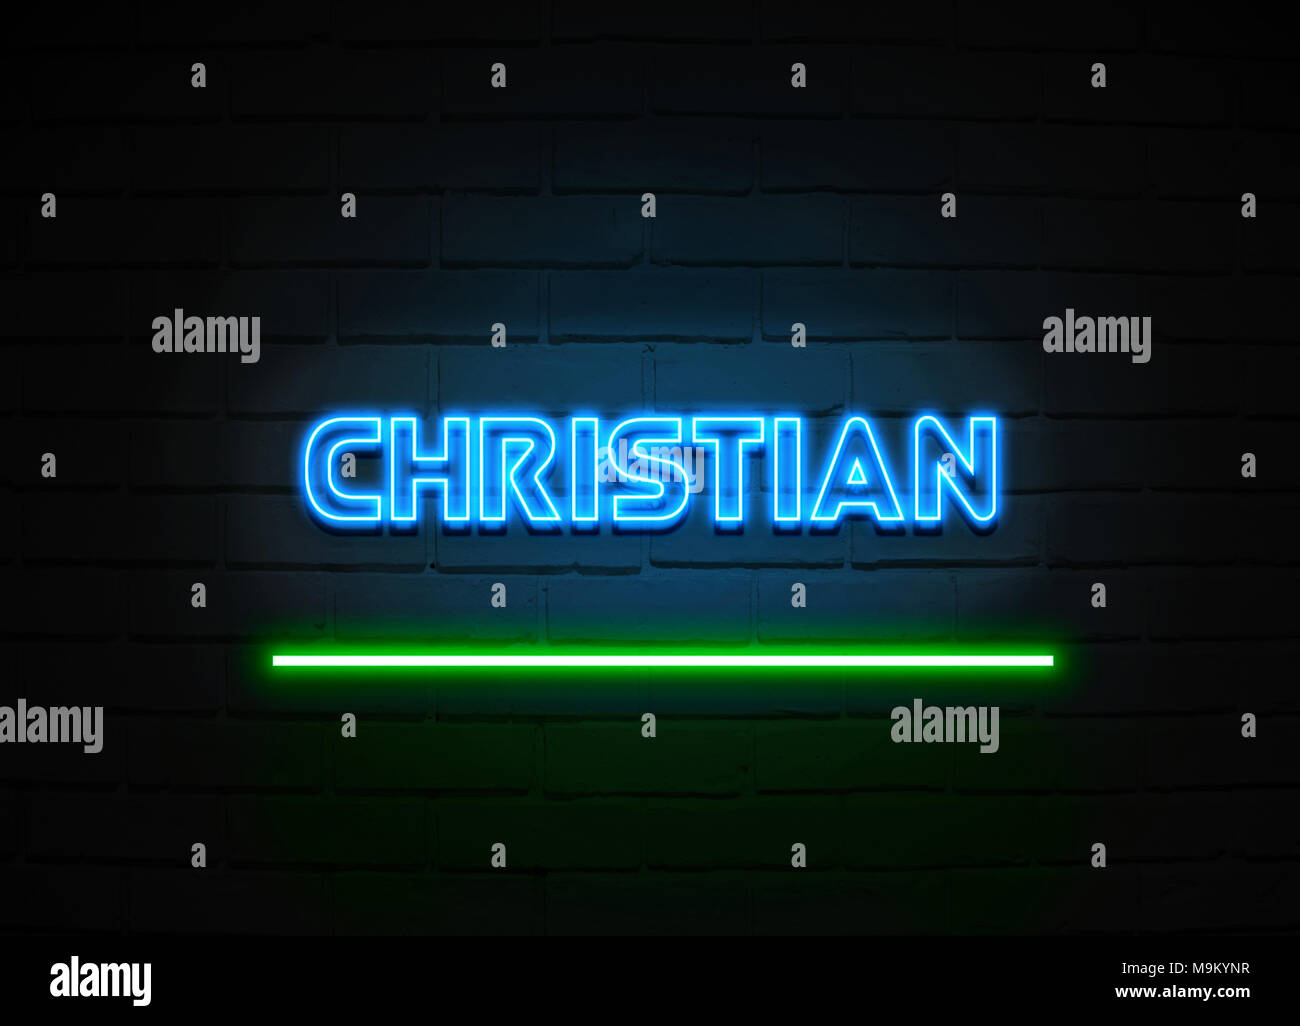 Christian Leuchtreklame - glühende Leuchtreklame auf brickwall Wand - 3D-Royalty Free Stock Illustration dargestellt. Stockfoto